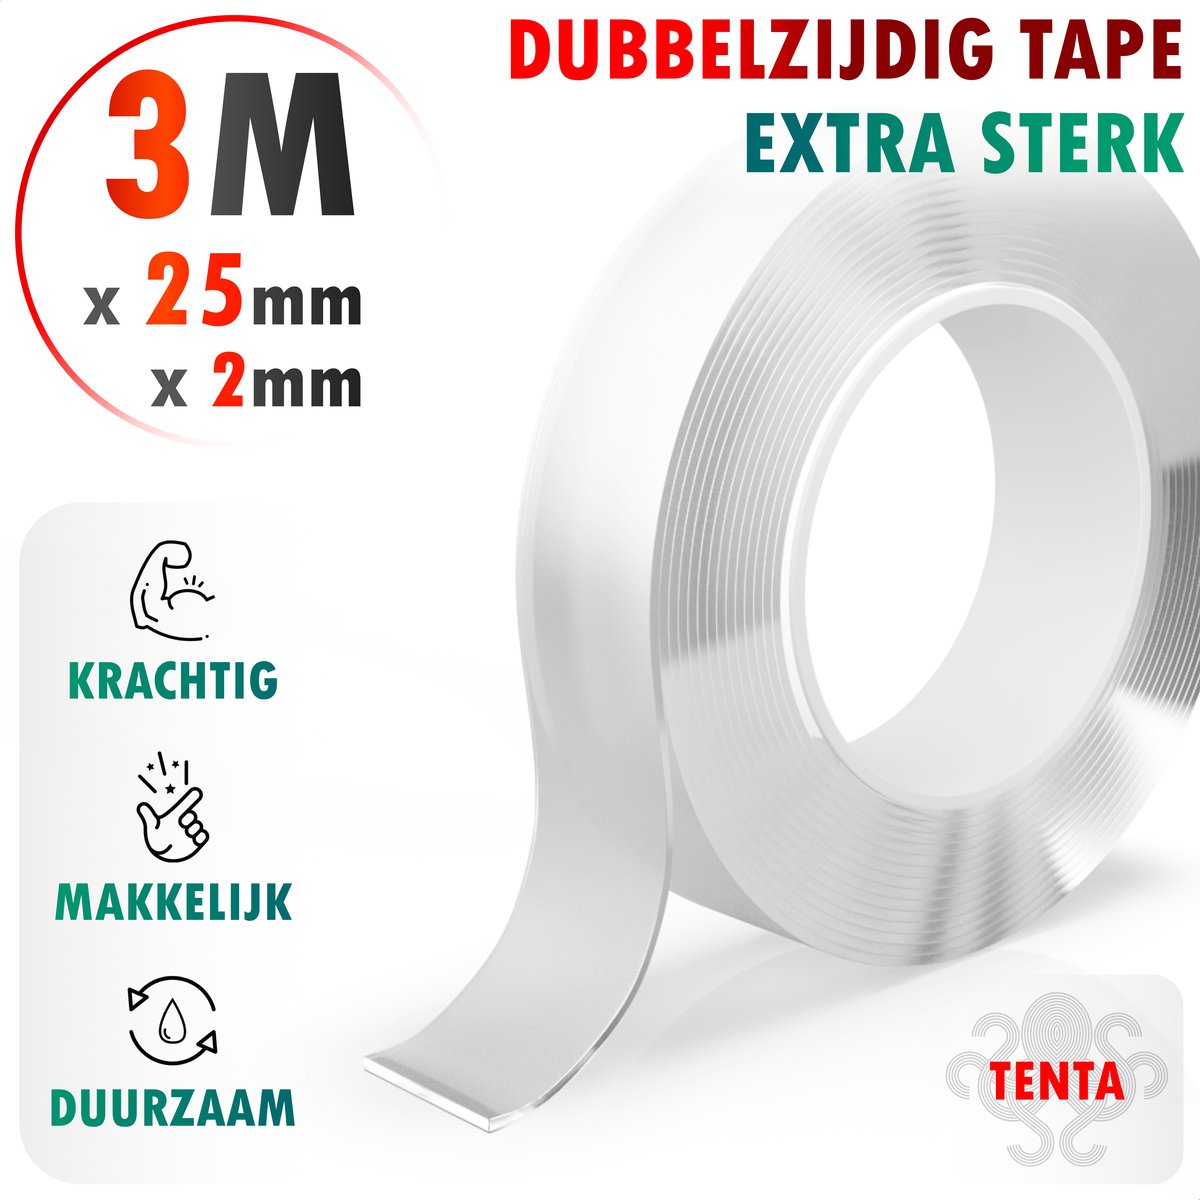 TENTA® Dubbelzijdig Tape Extra Sterk - 3m x 25mm x 2mm | bol.com